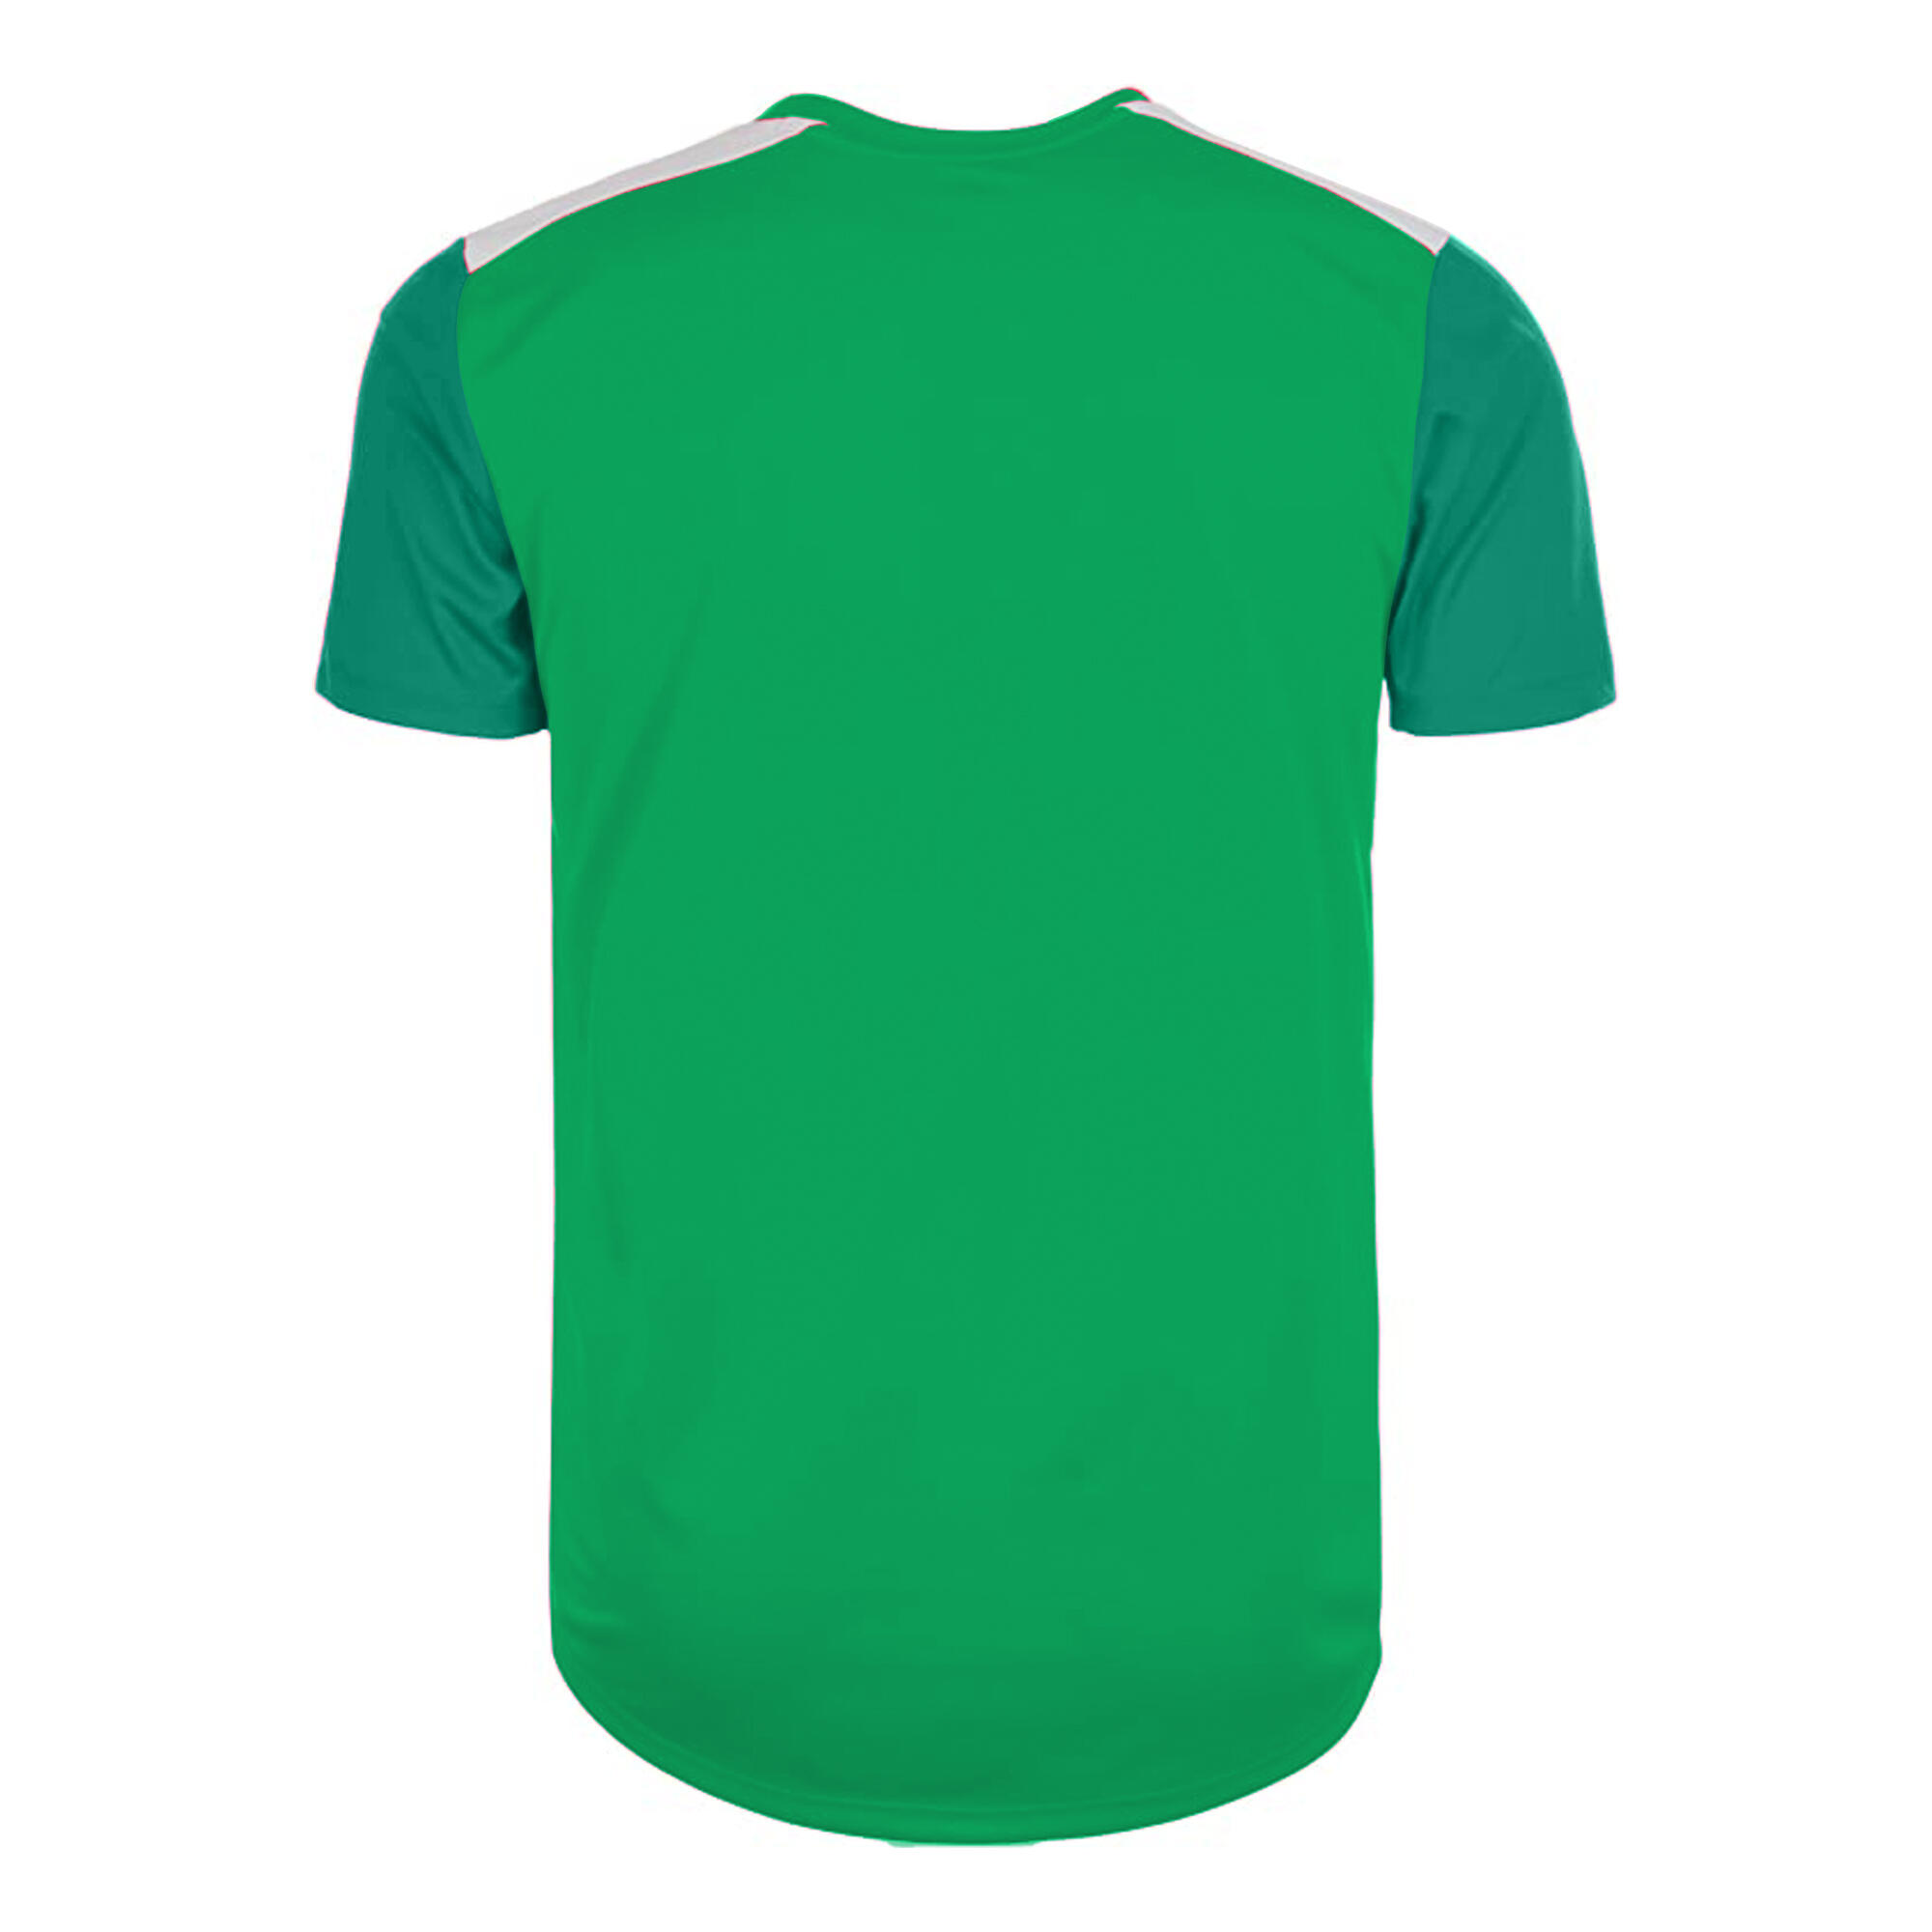 Boys Polyester Training Jersey (Emerald Green/Verdant Green/White) 2/3